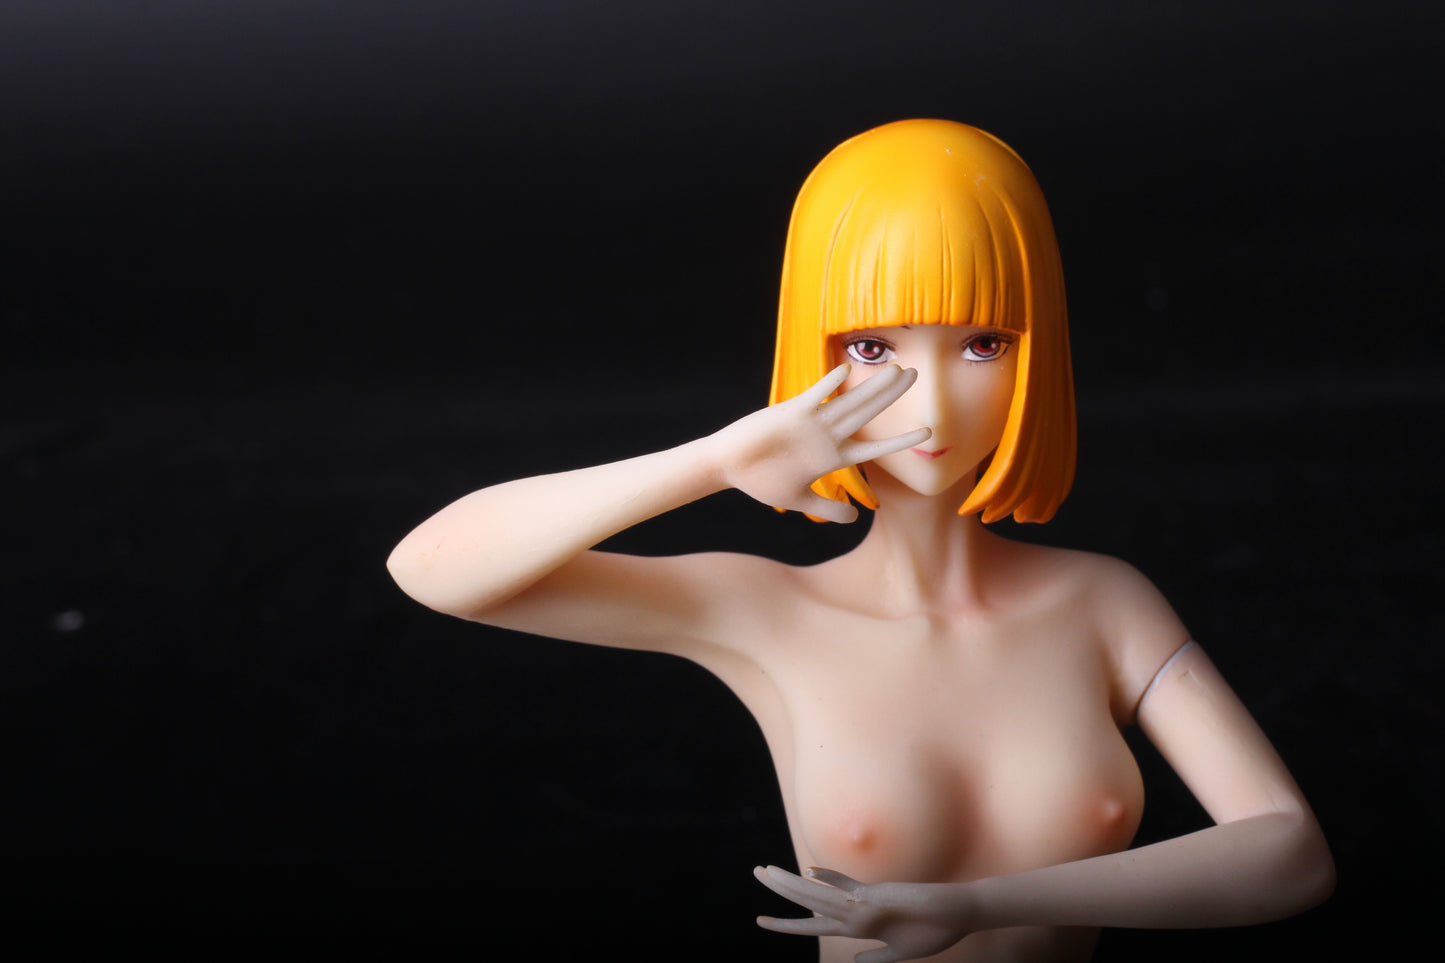 Prison School midorikawa hana 1/6 naked anime figure sexy resin figures